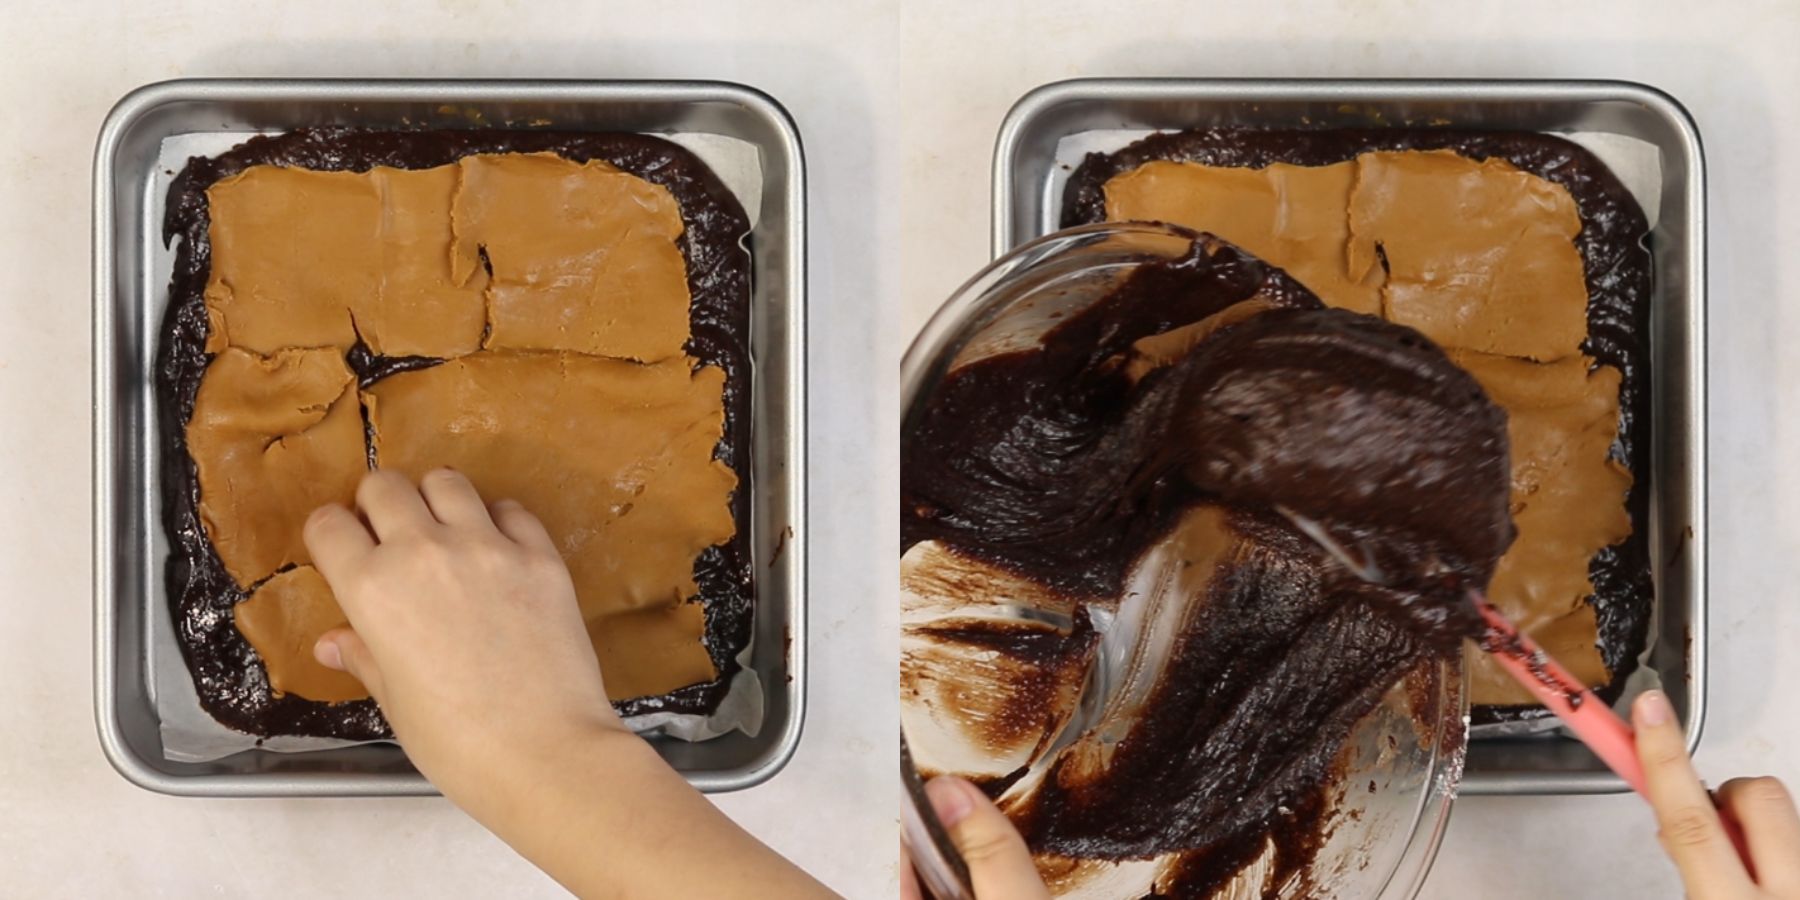 Brownies process shots.